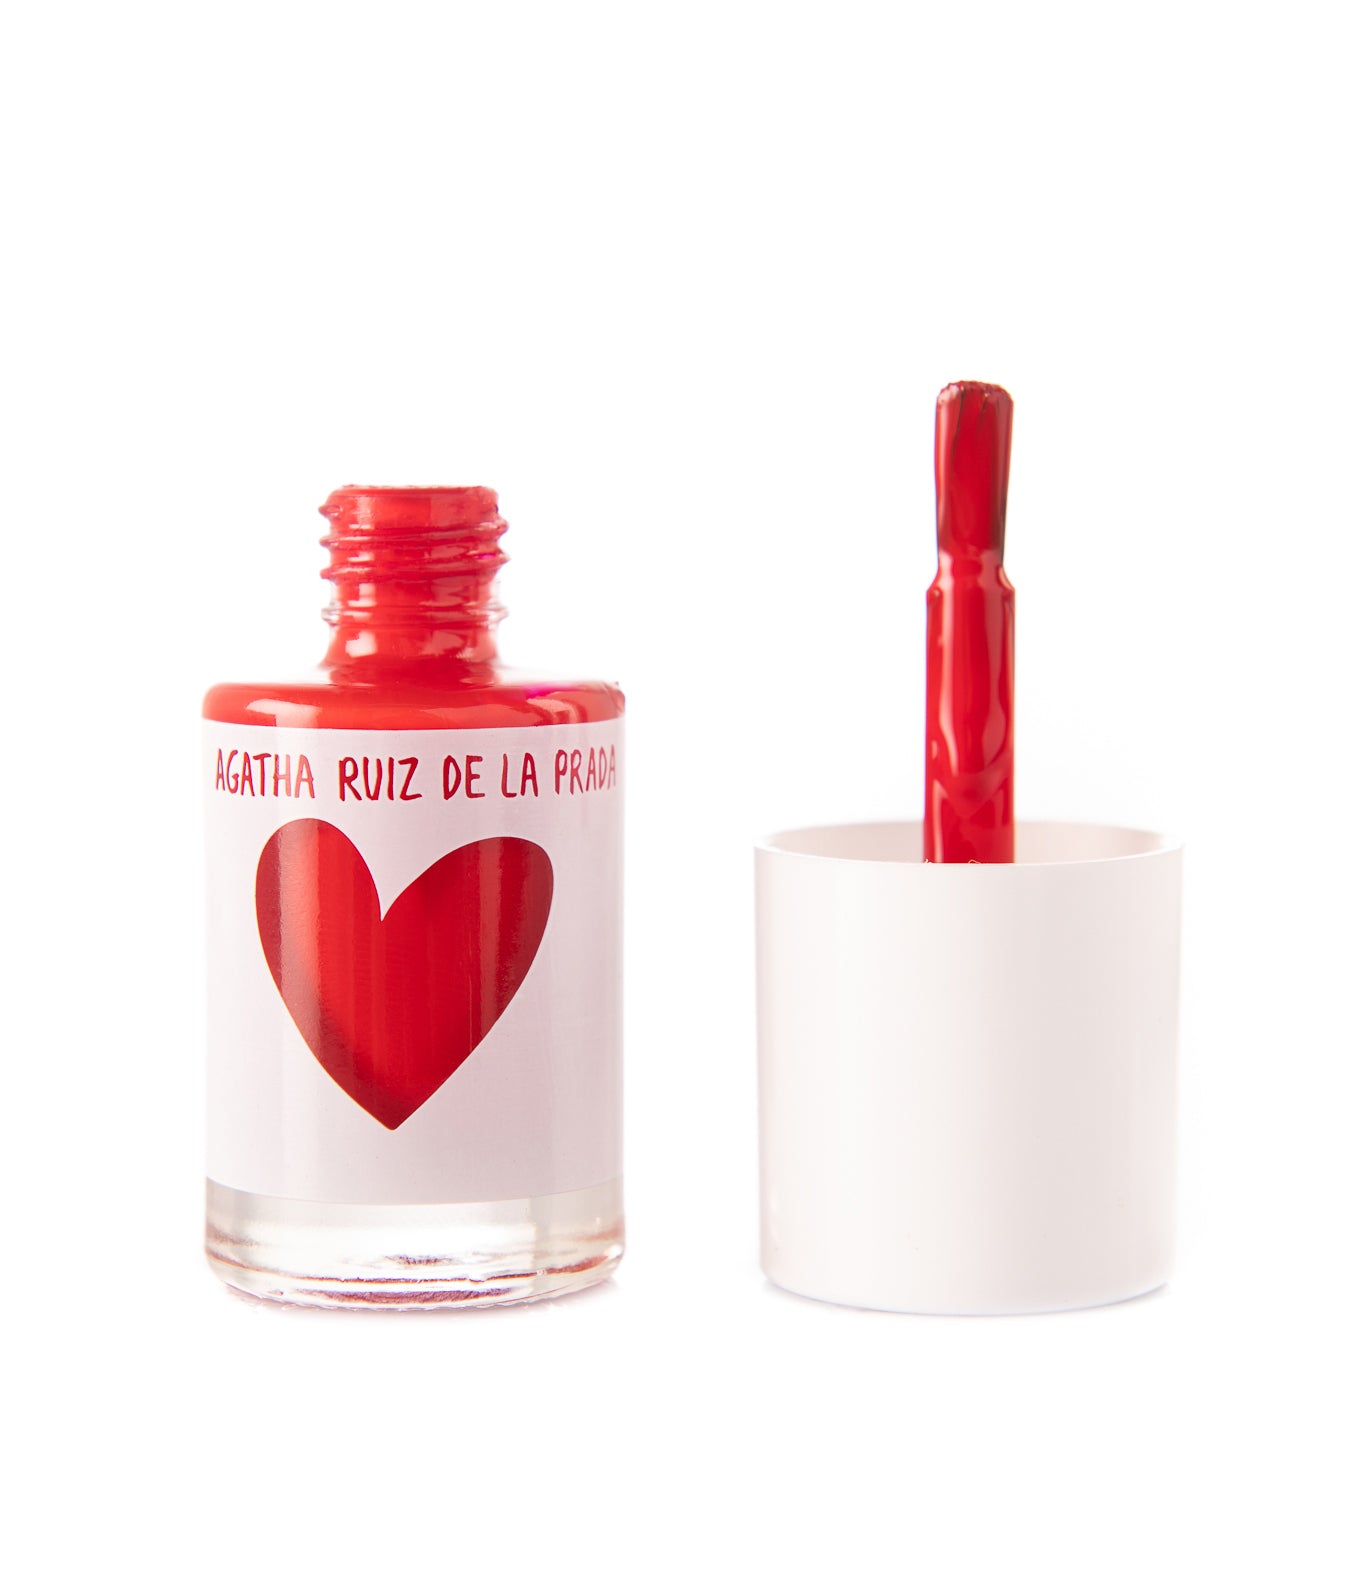 Agatha Ruiz de la Prada Nail Polish - Open Bottle with Cap and Brush Red